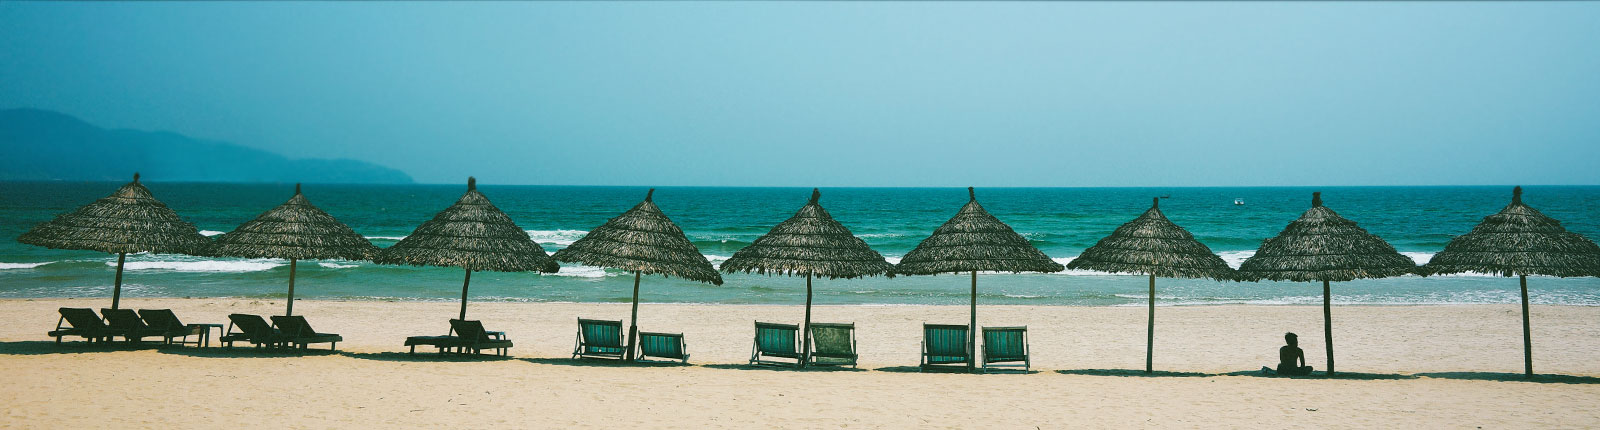 Thatched umbrellas lined up along the beach in Mahogany Bay, Isla Roatan